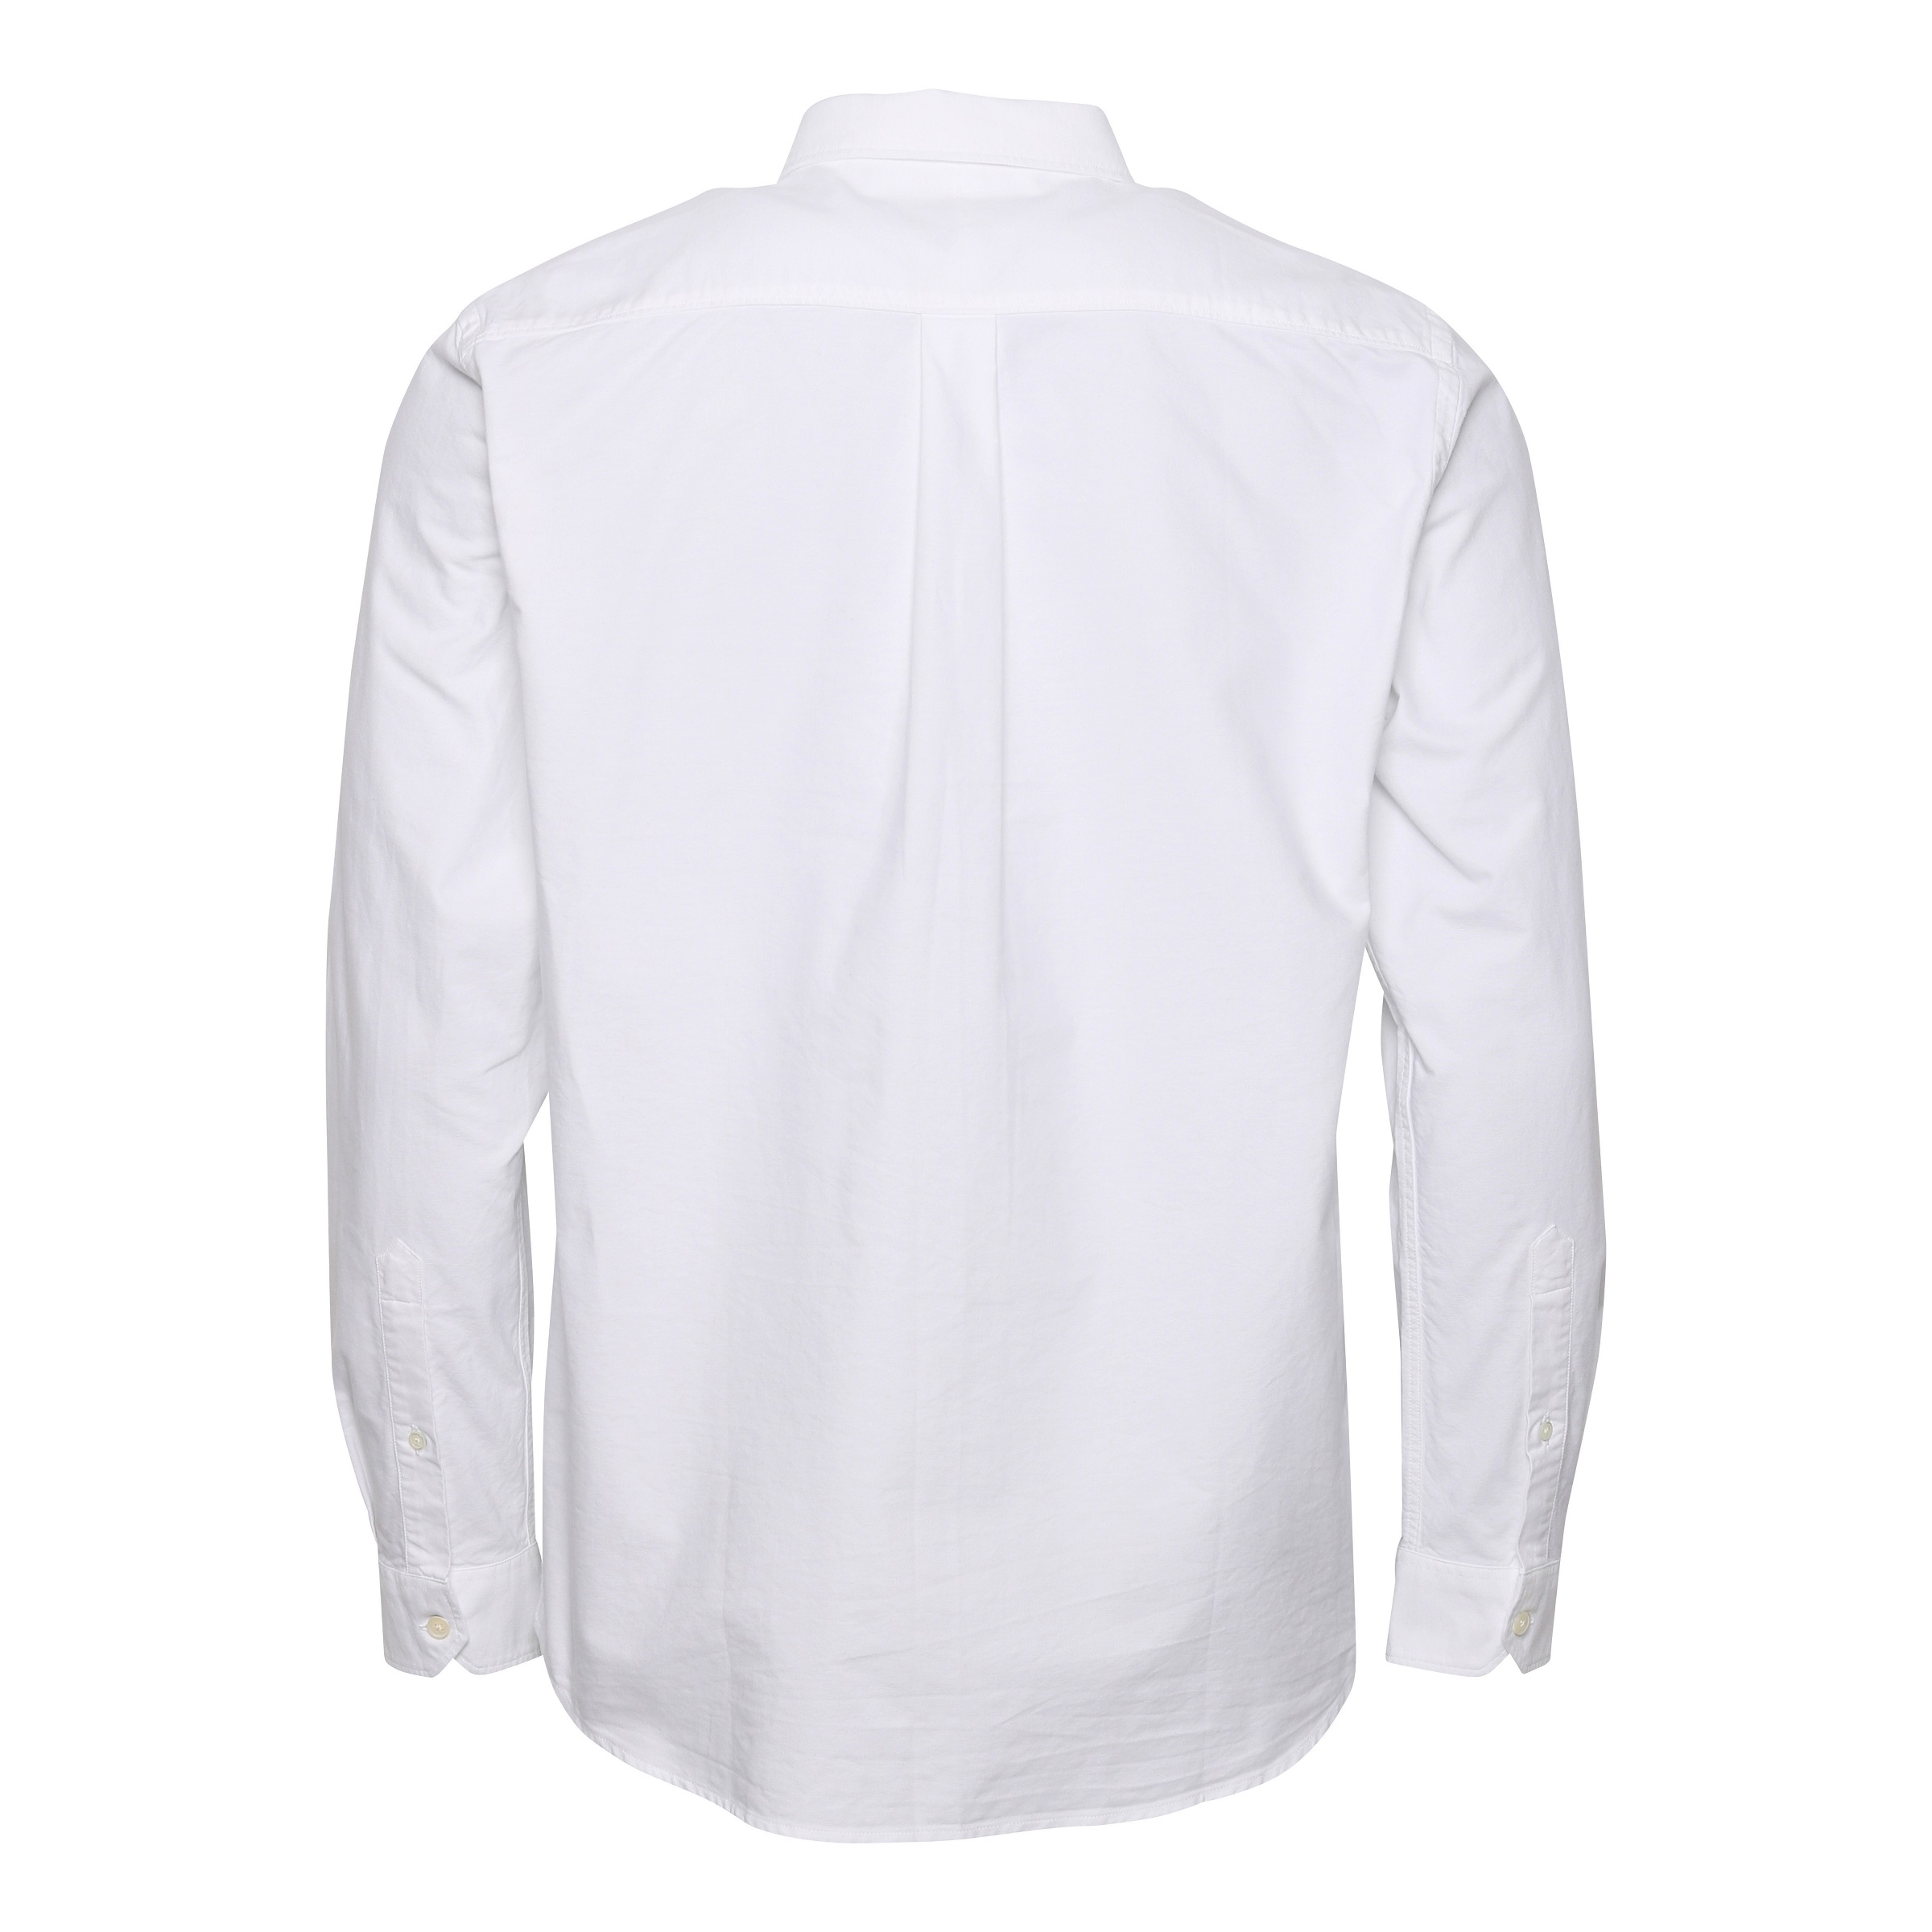 CLOSED Basic Shirt in White S